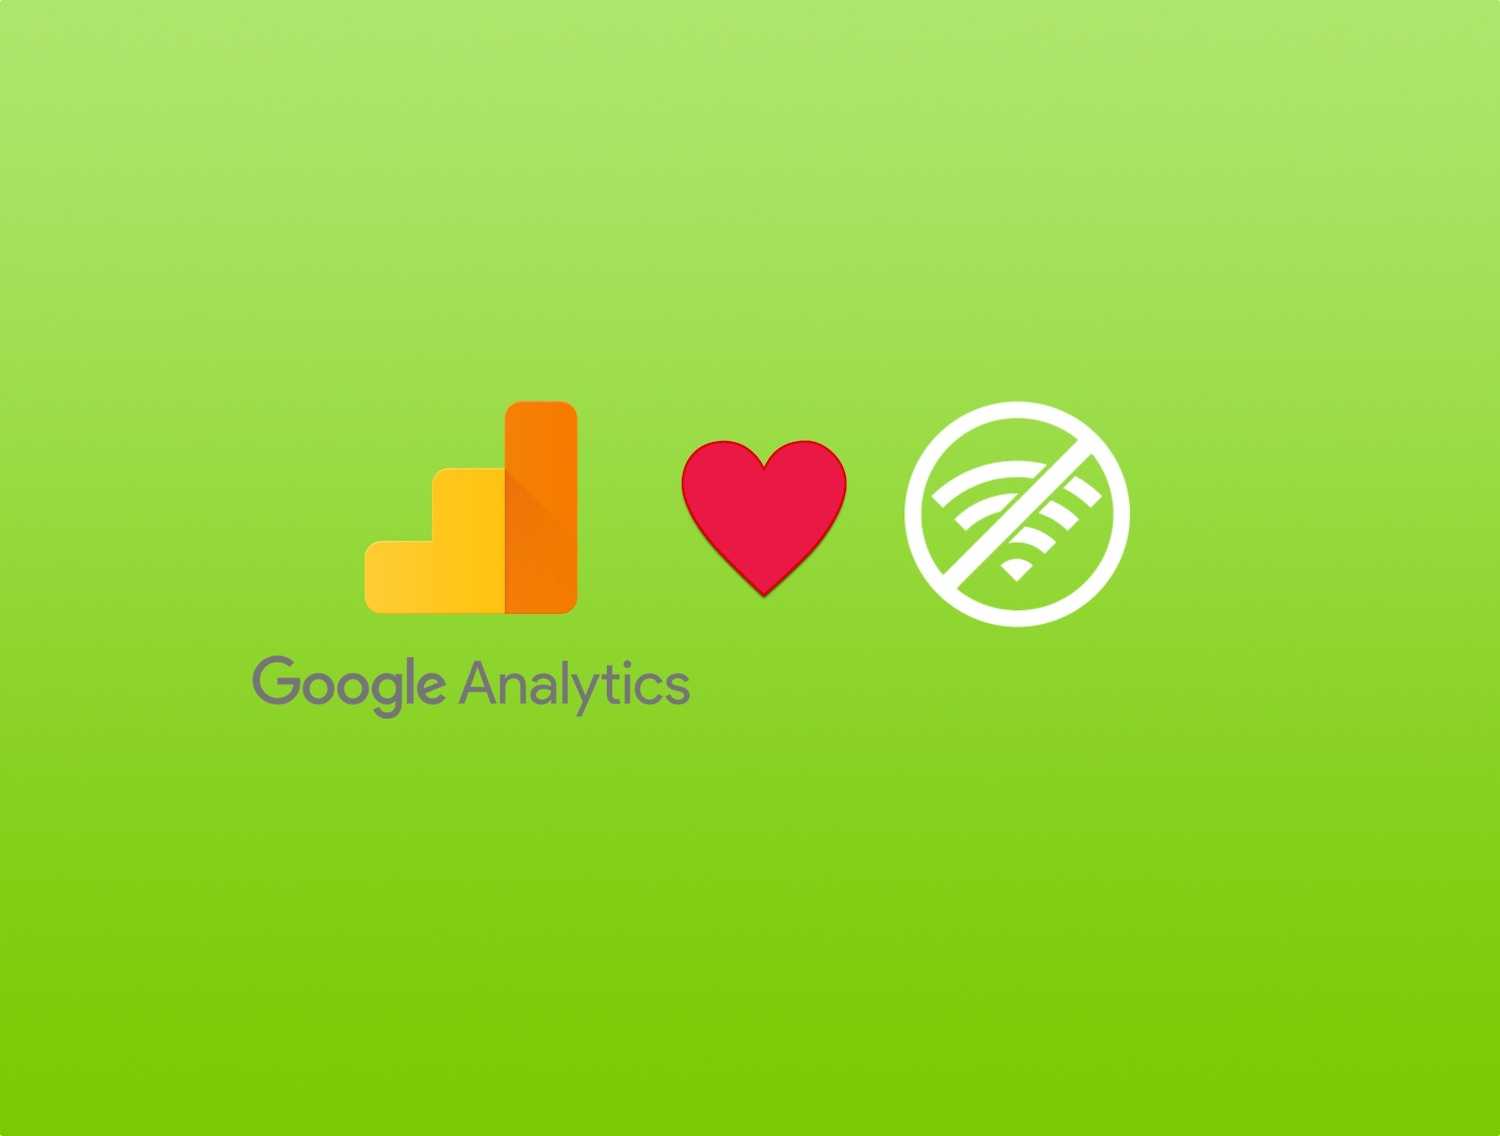 Implement offline tracking with Google Analytics in your Progressive Web App